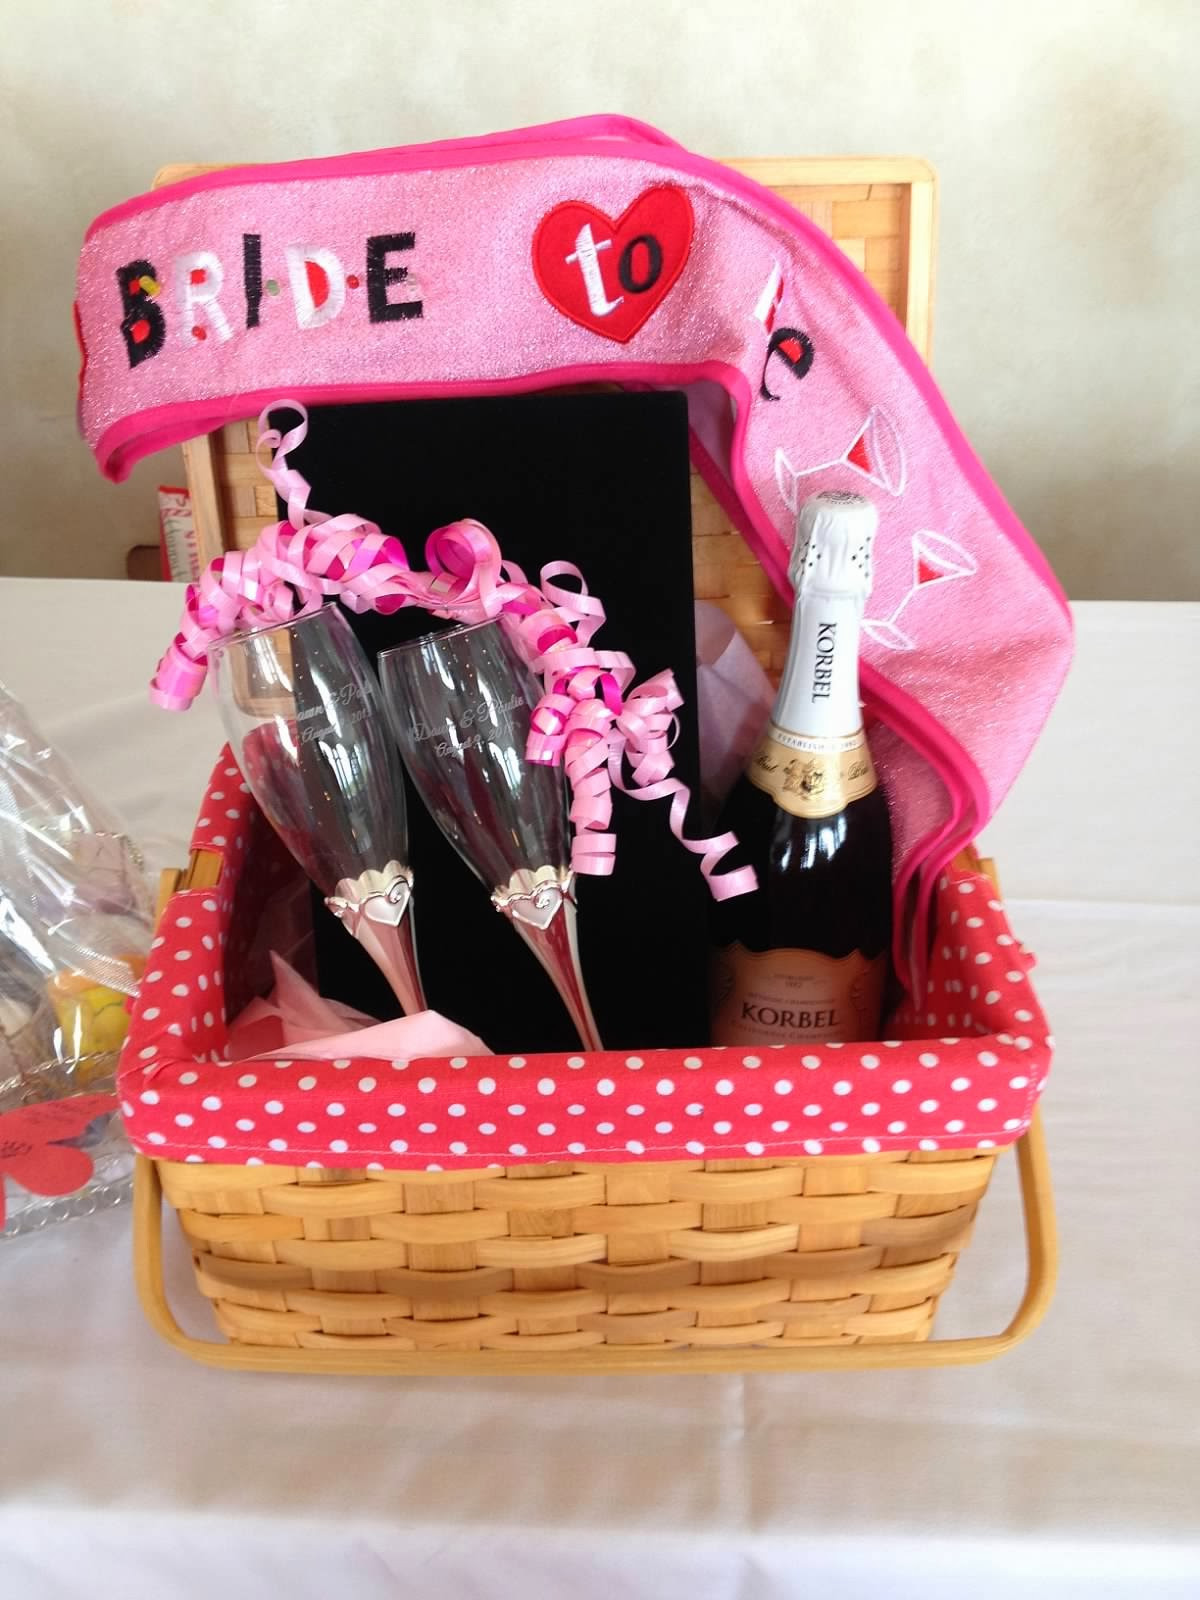 Bridal Gift Basket Ideas
 2 Girls 1 Year 730 Moments to Wedding Wednesdays